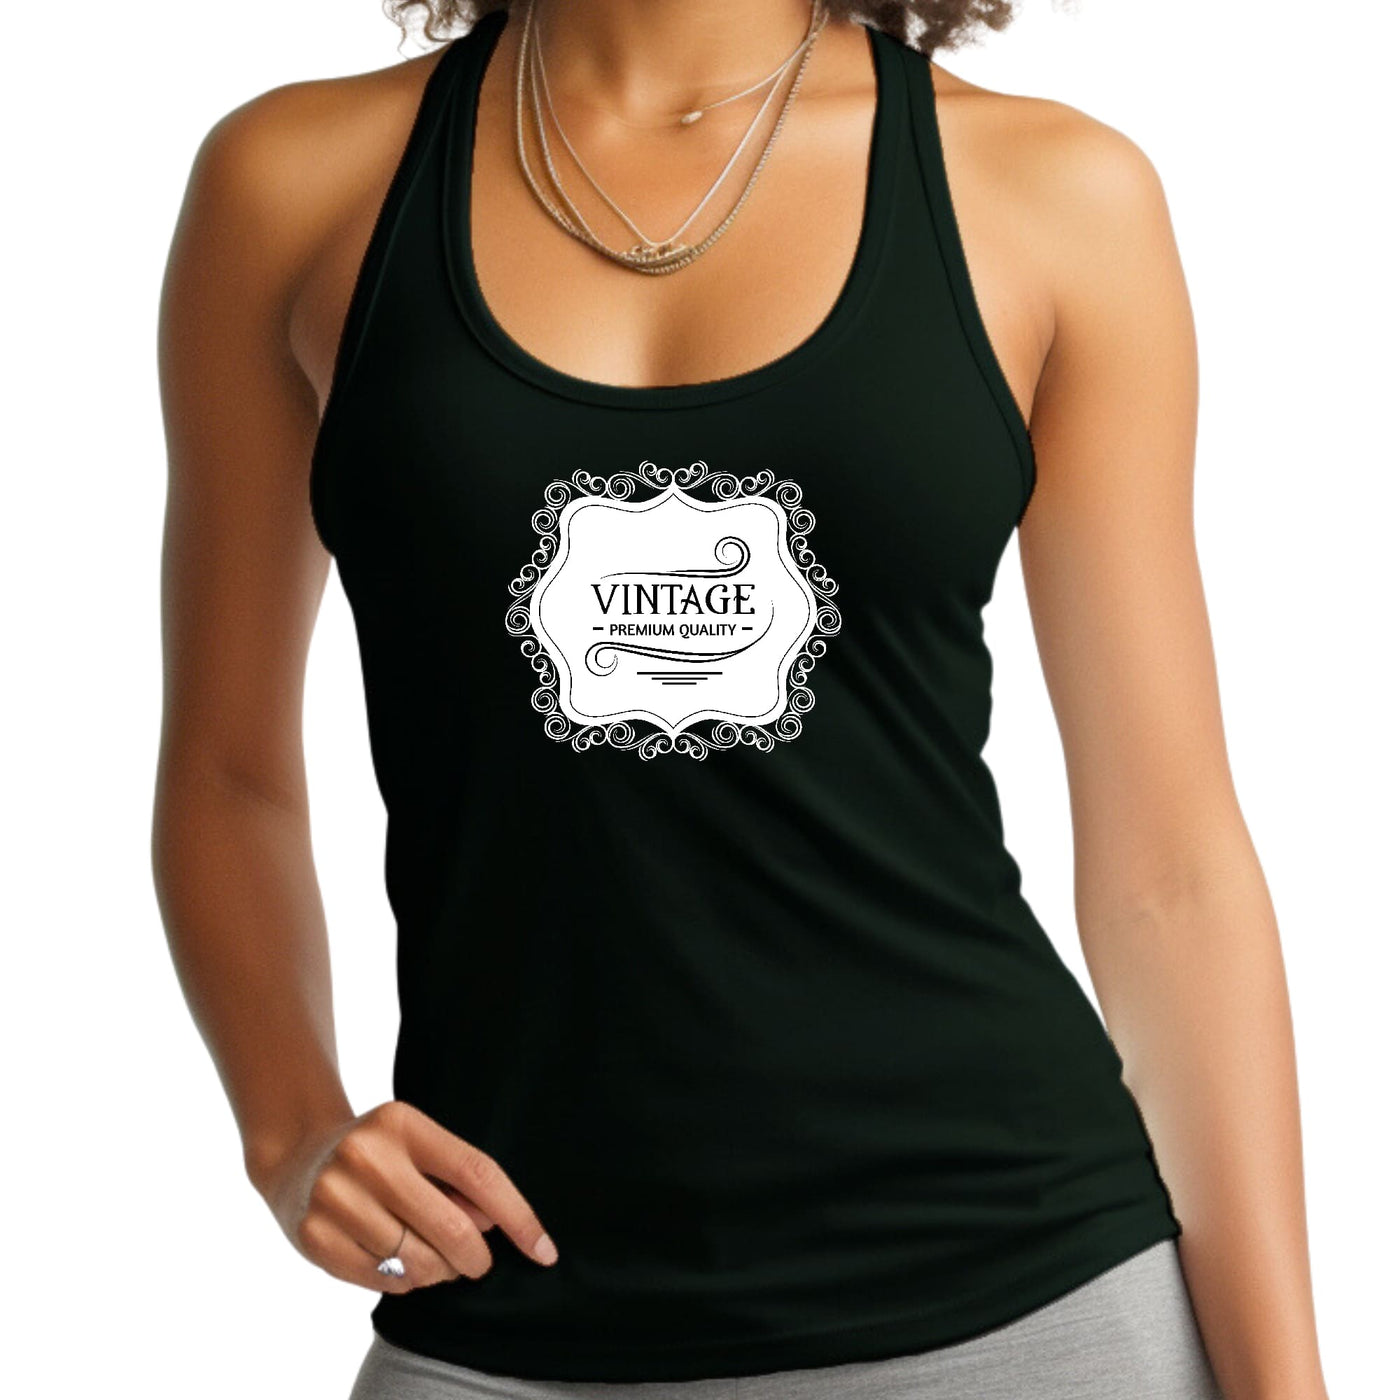 Womens Tank Top Fitness T - shirt Vintage Premium Quality White Black - Tops